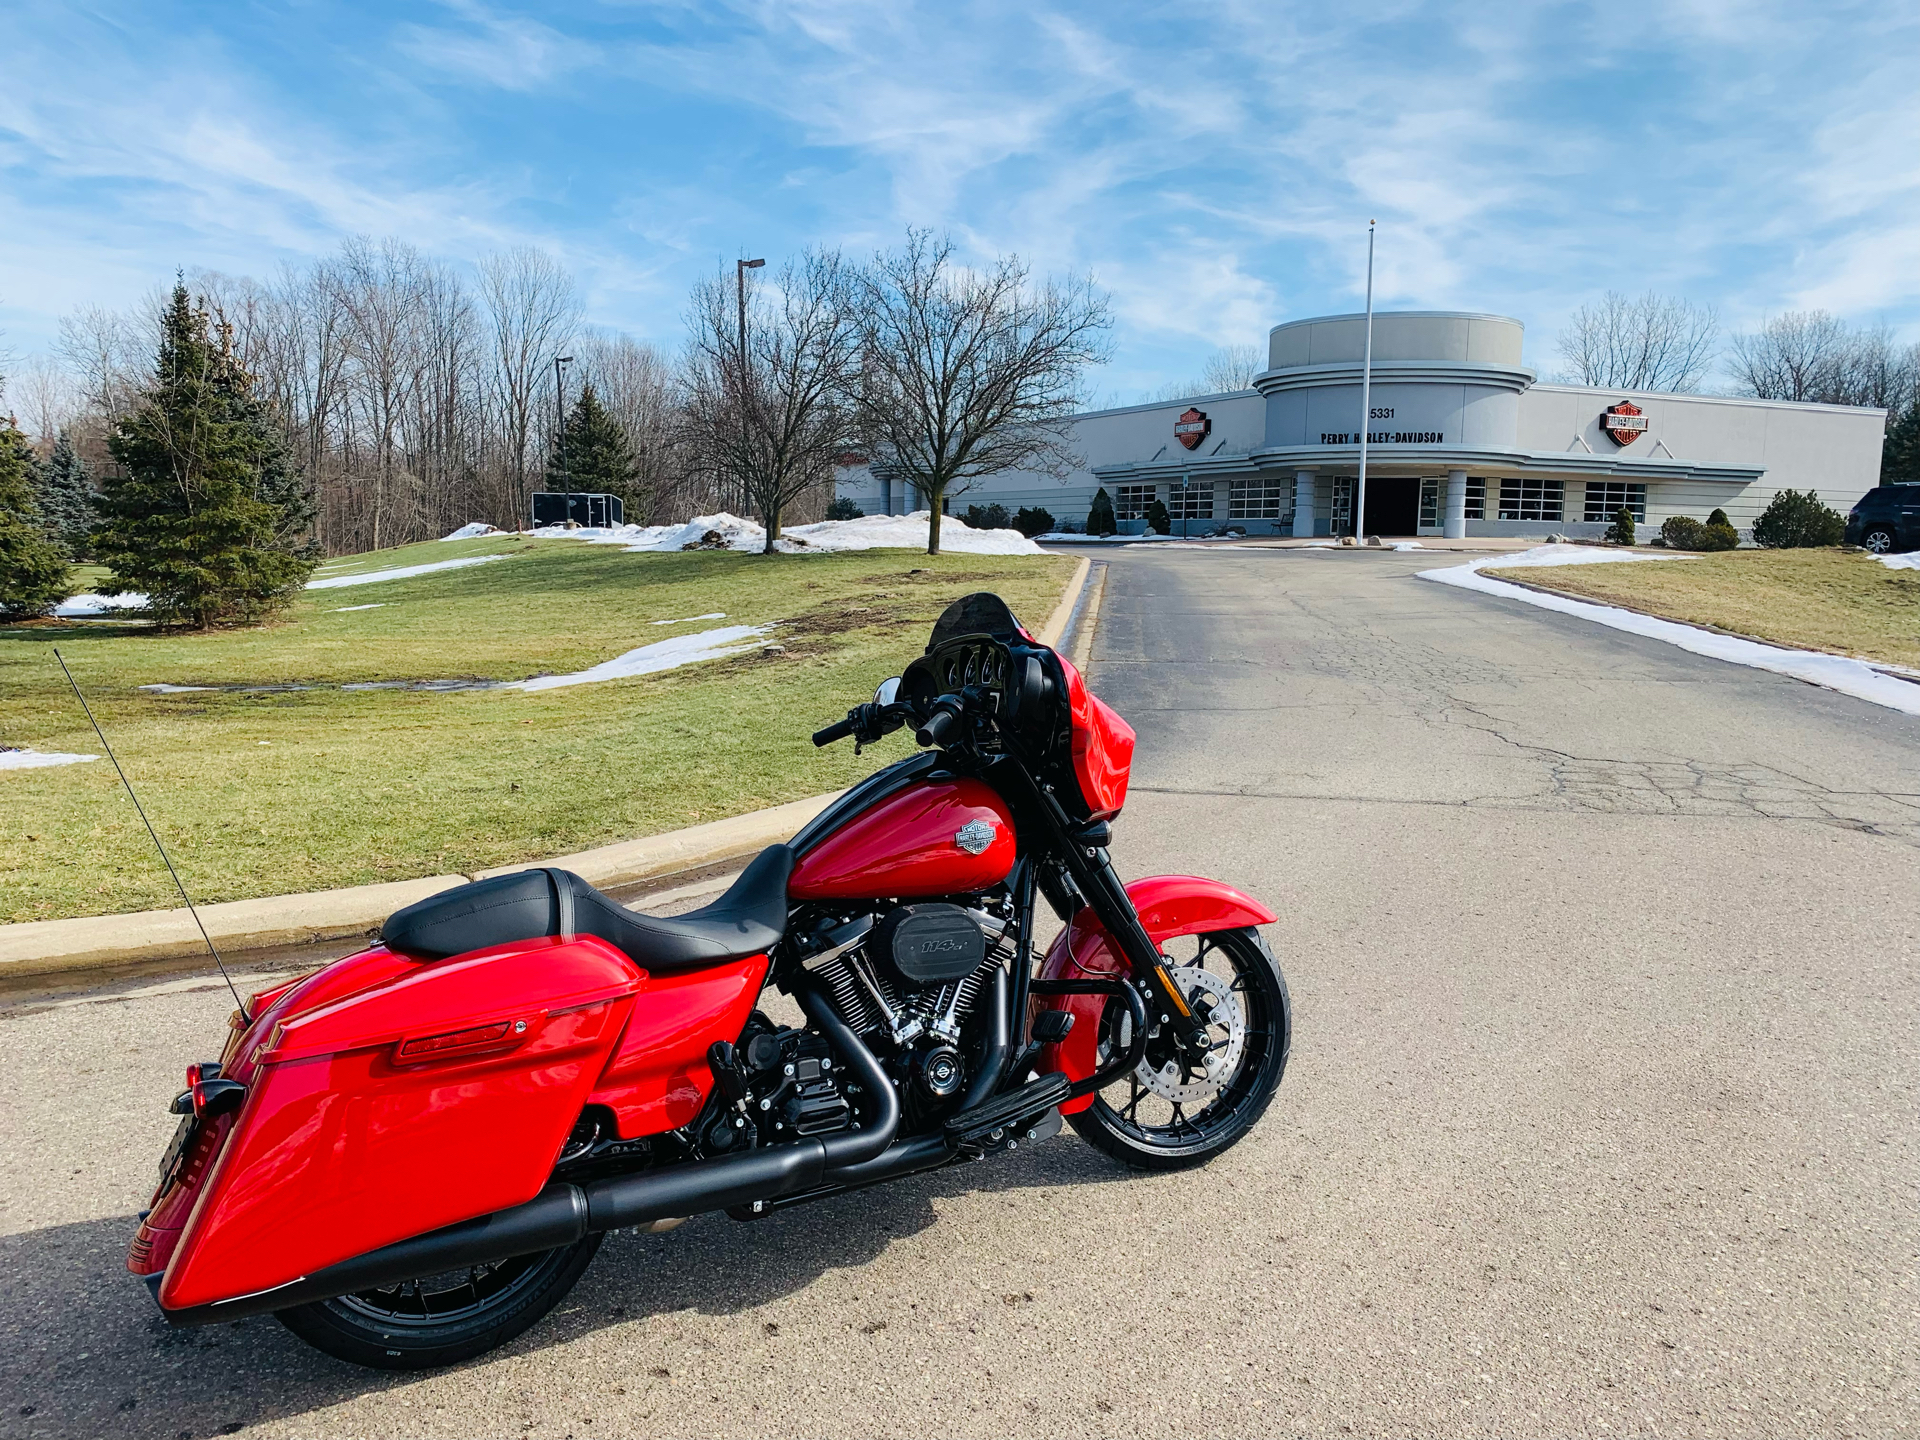 2022 Harley-Davidson Street Glide® Special in Portage, Michigan - Photo 6